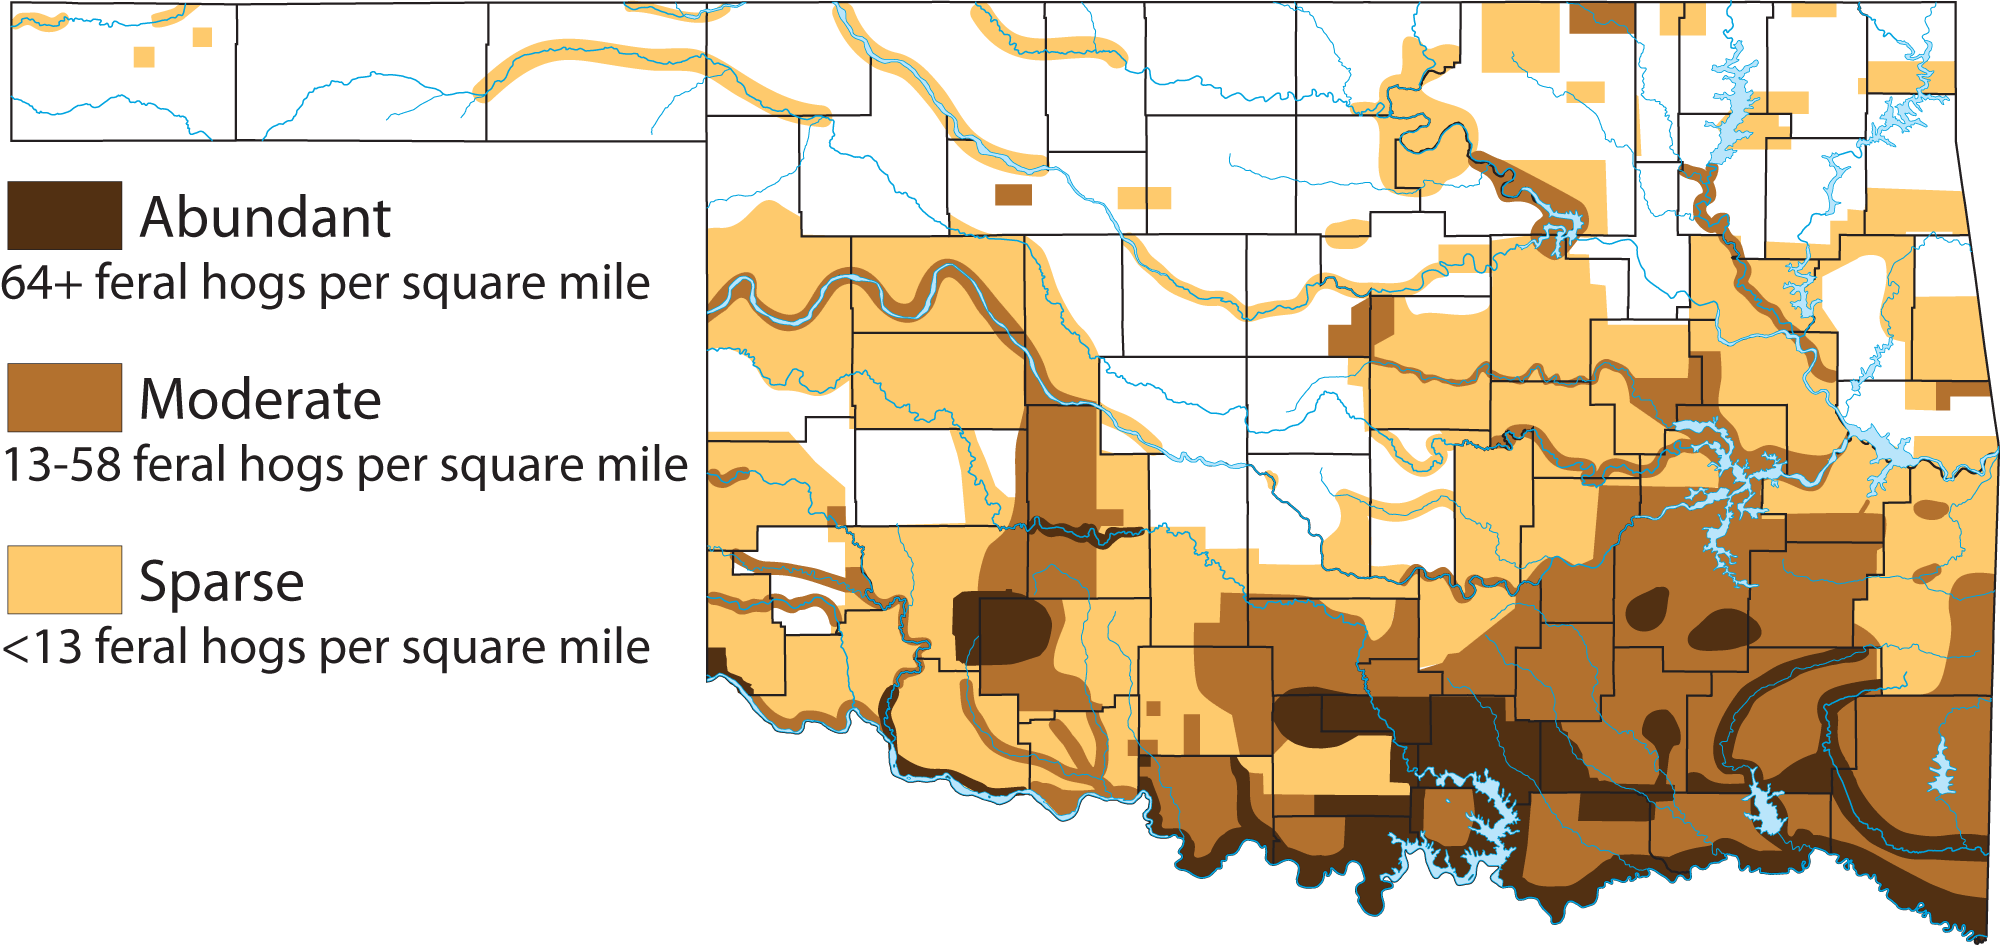 Figure 2. Estimated feral hog density in Oklahoma (2007).